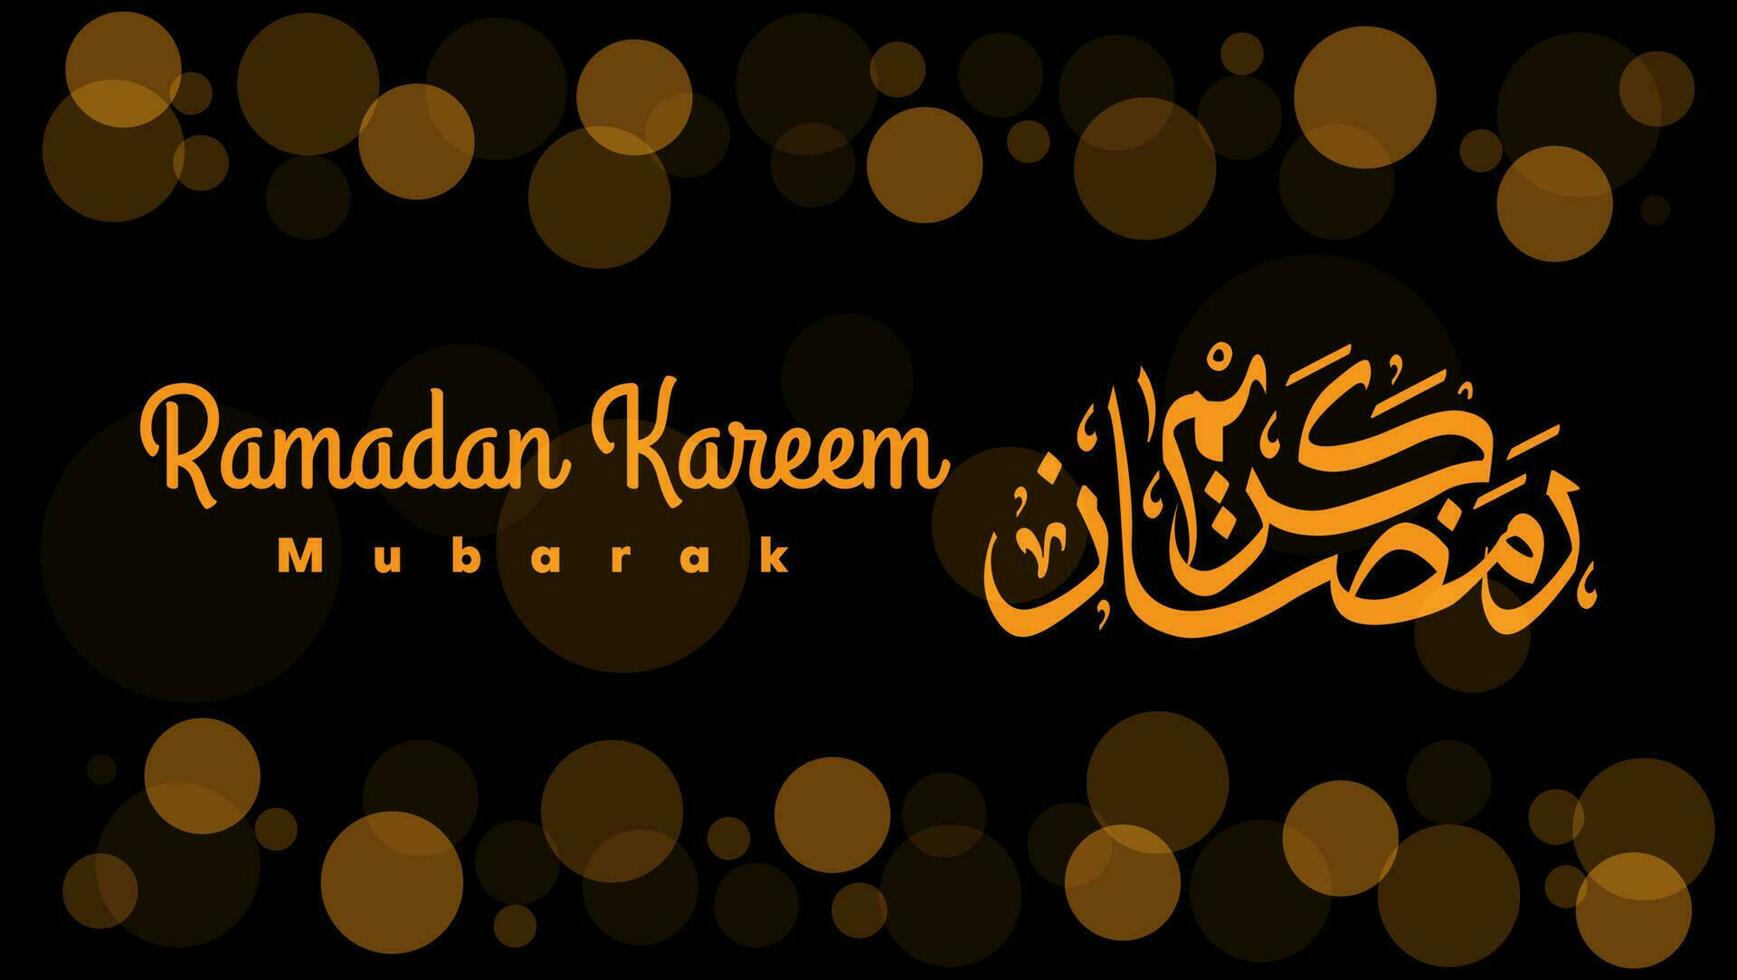 Ramadan Kareem background with Arabic calligraphy on bokeh vector illustration